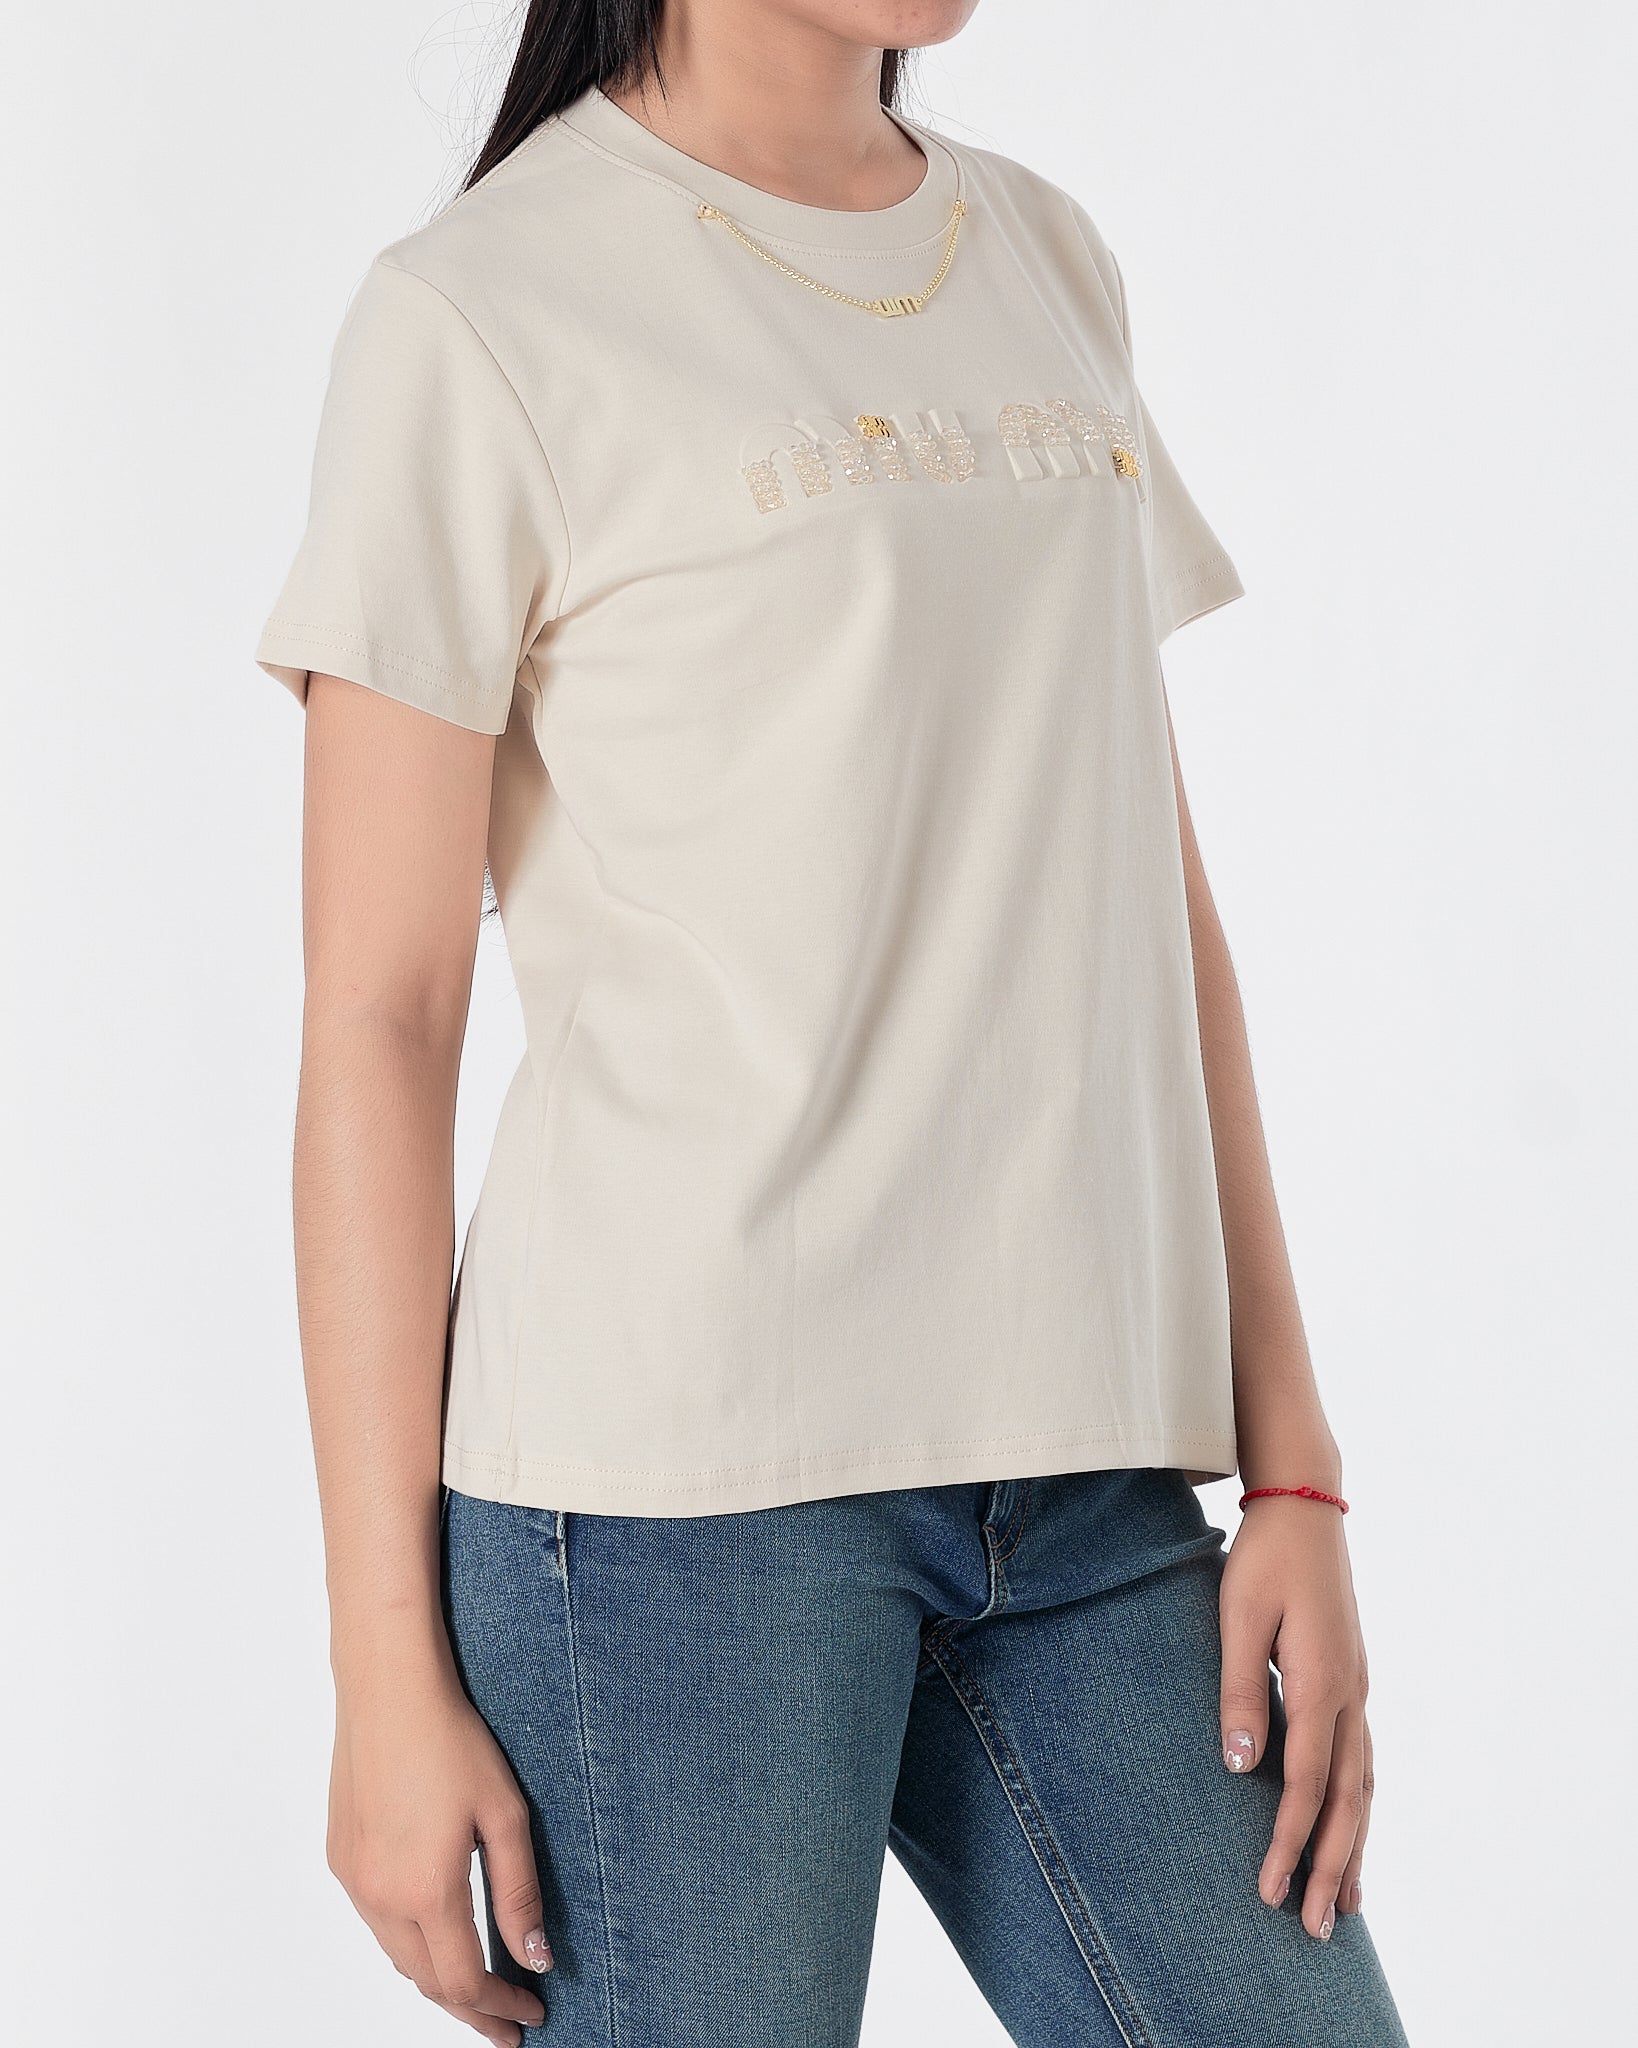 MIU Rhinestone Neck Chain Lady Cream  T-Shirt 27.90